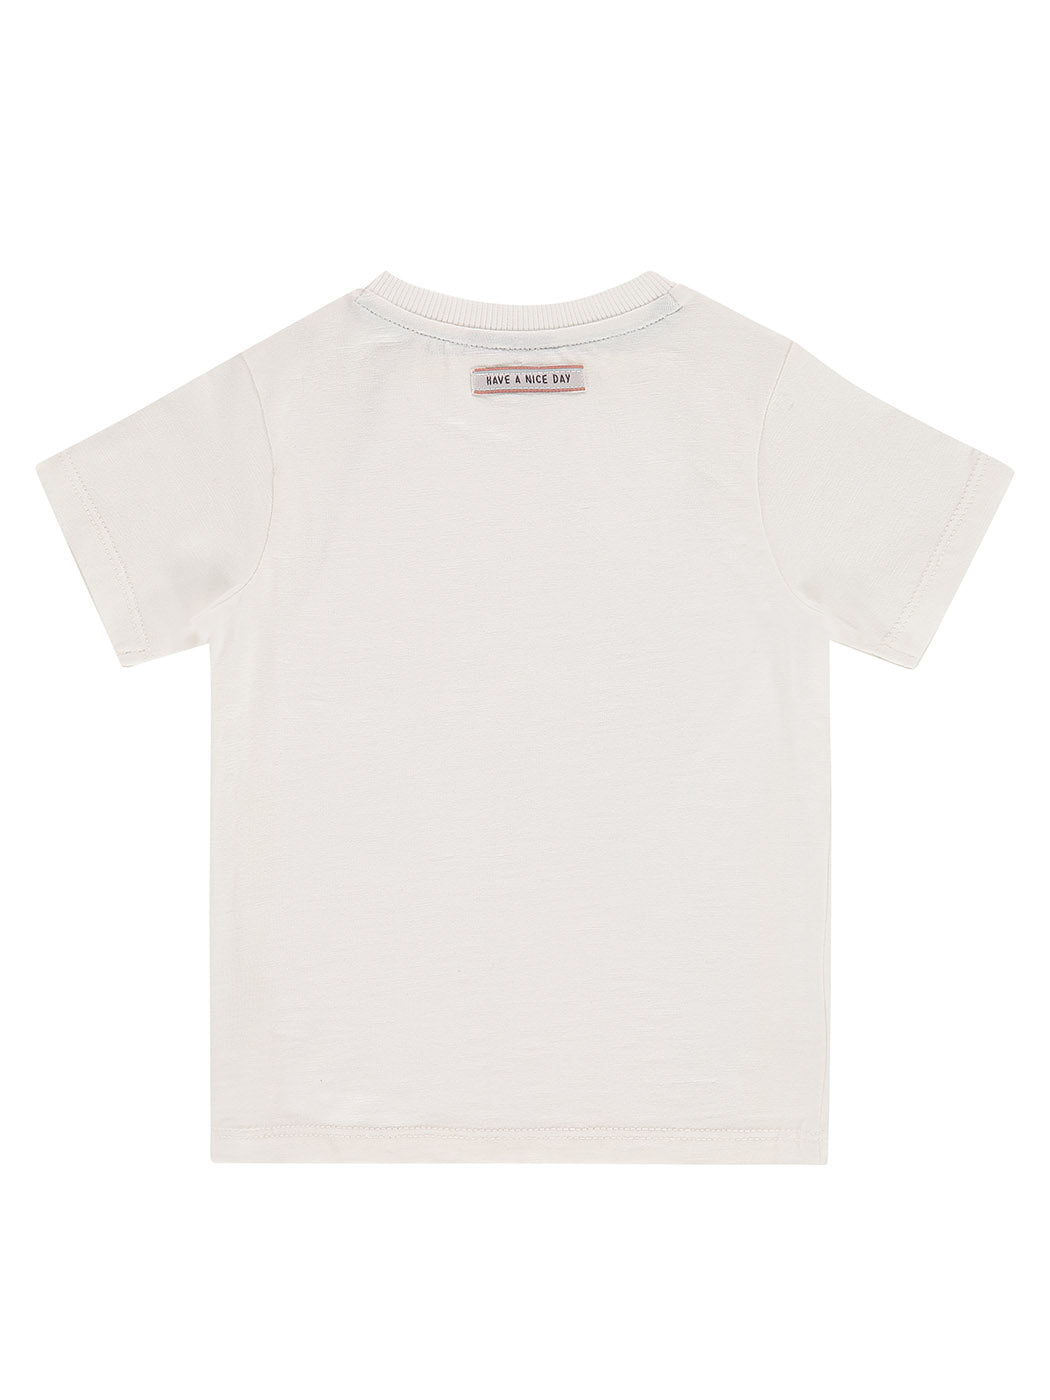 Babyface - Boy's T-Shirt - BBE21207641 Ivory